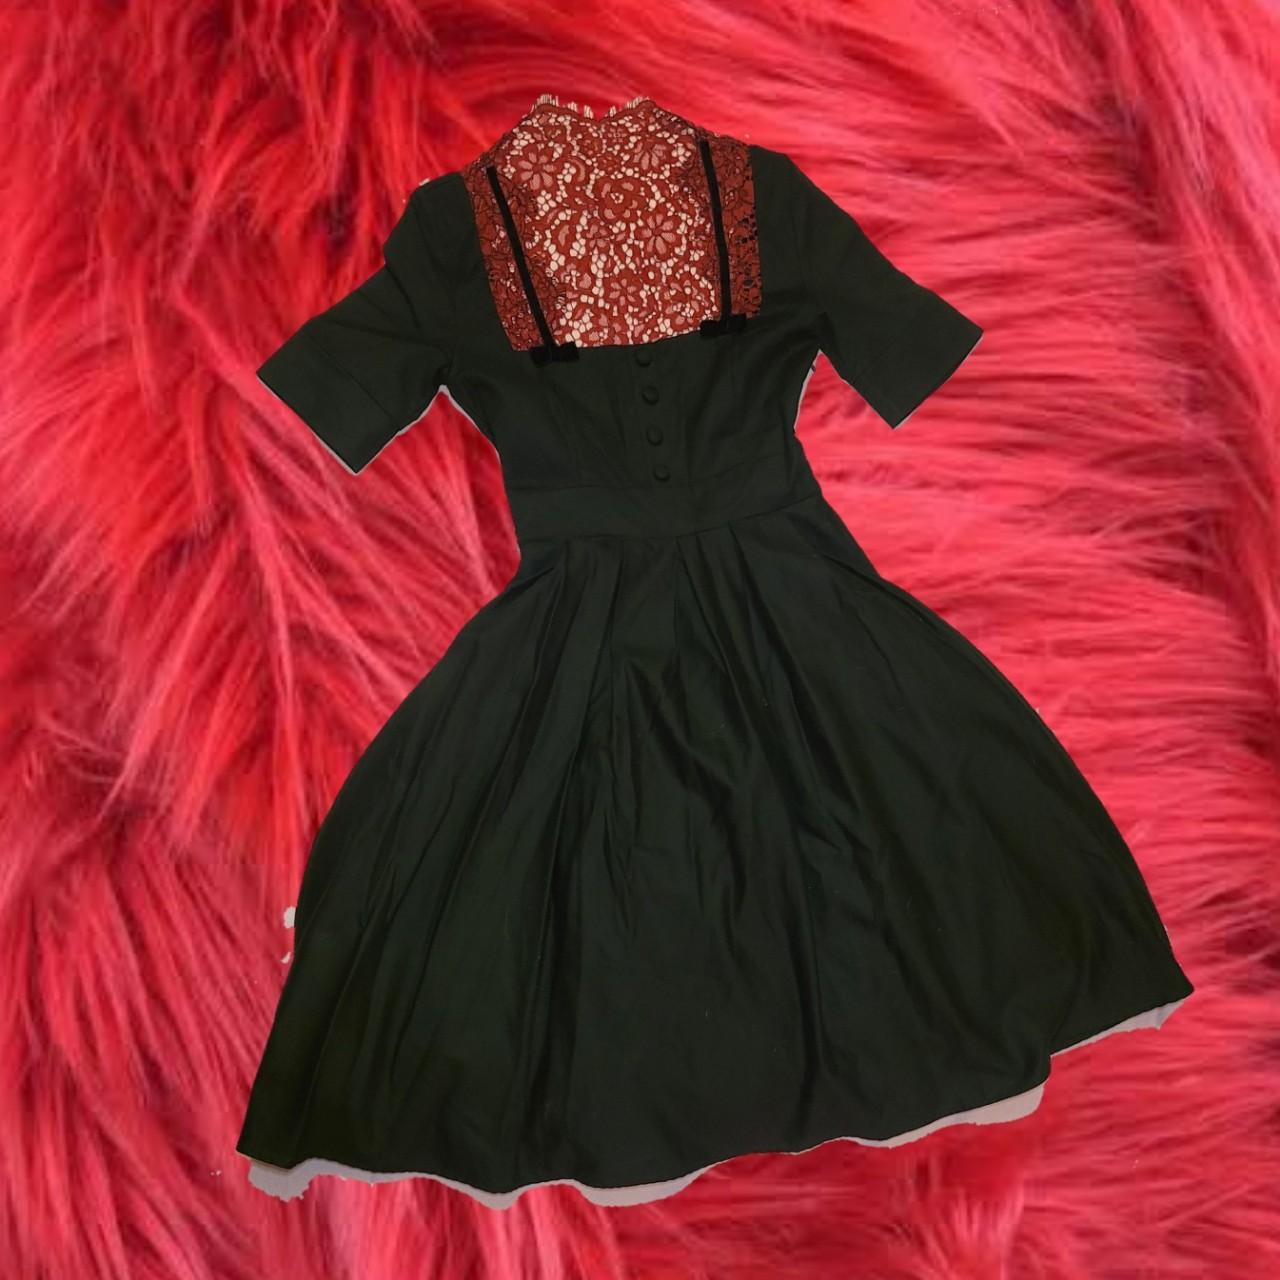 Women's Black and Red Dress | Depop